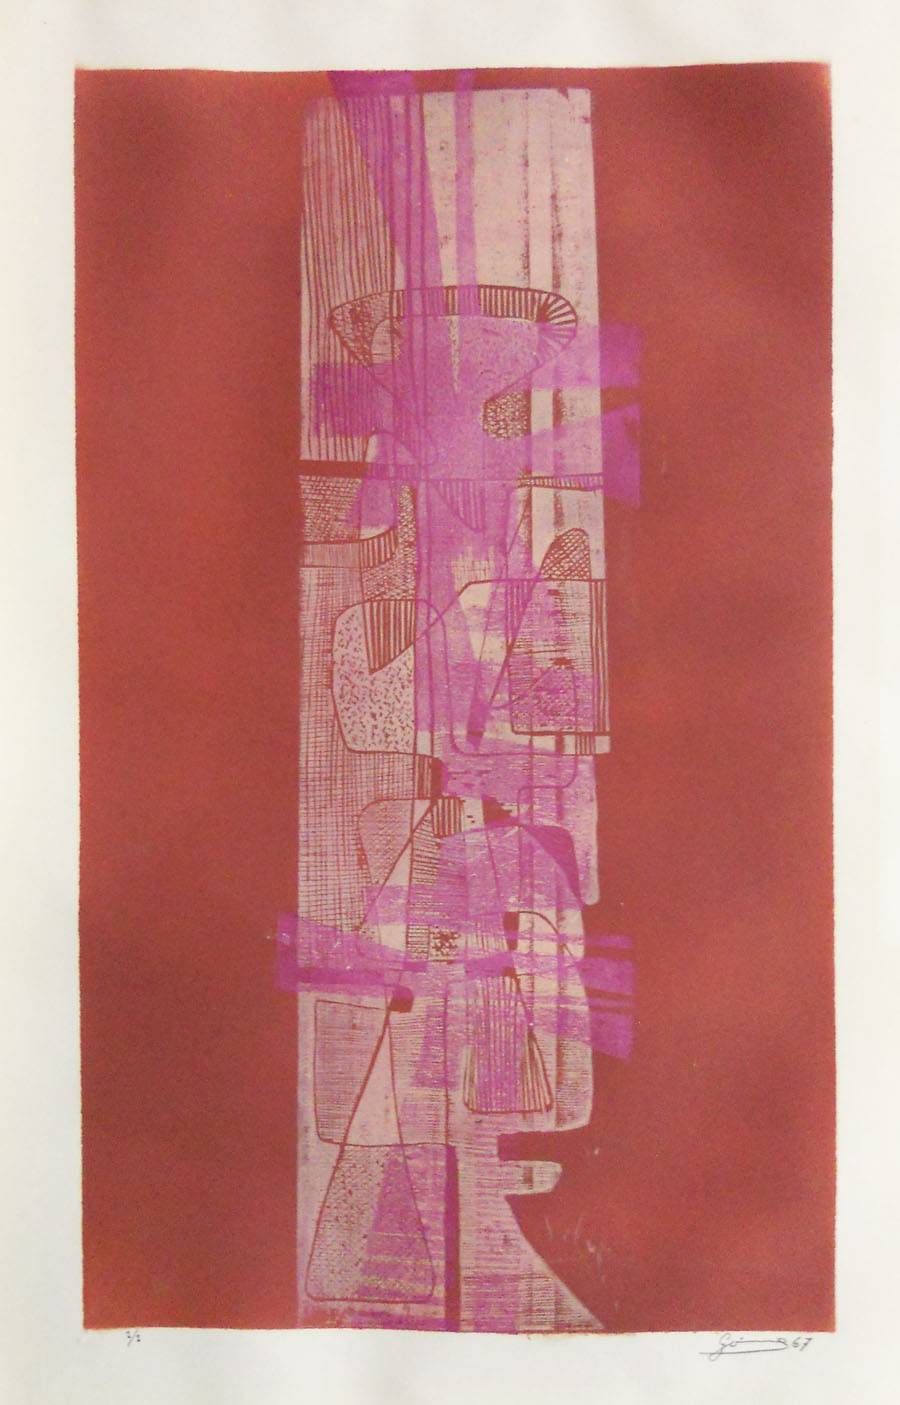 XXXVIII, 1967. Francisco Gómez Arballo (1938). Xilografía.  52 x 30 cm. Nº inv. 3031.